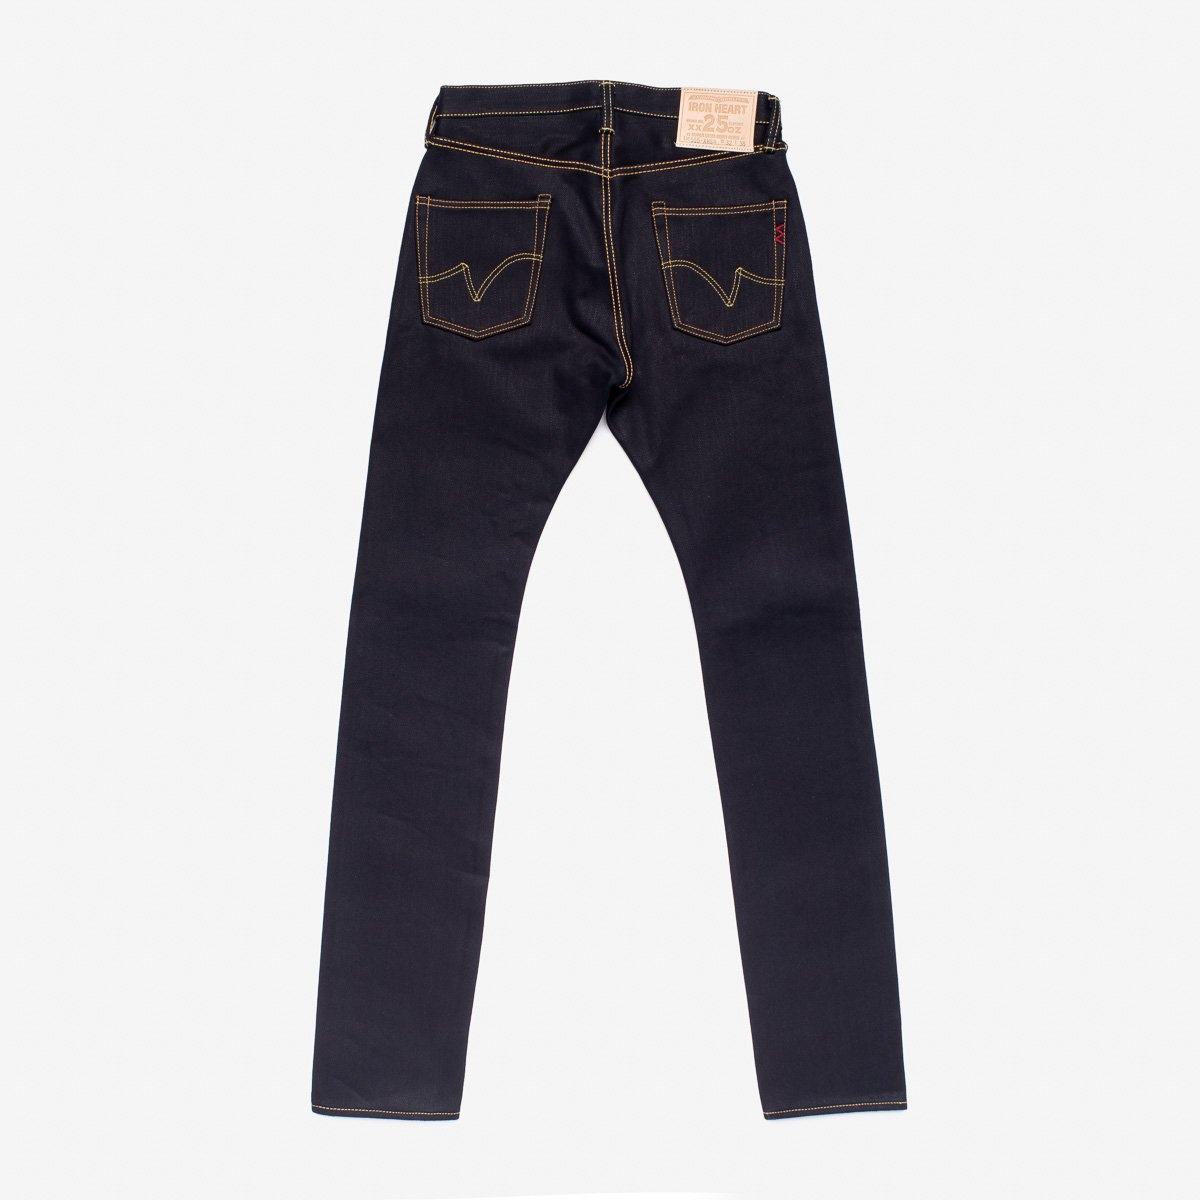 IH-555-XHSib 25oz Selvedge Denim Super Slim Cut Jeans - Indigo/Black - 5